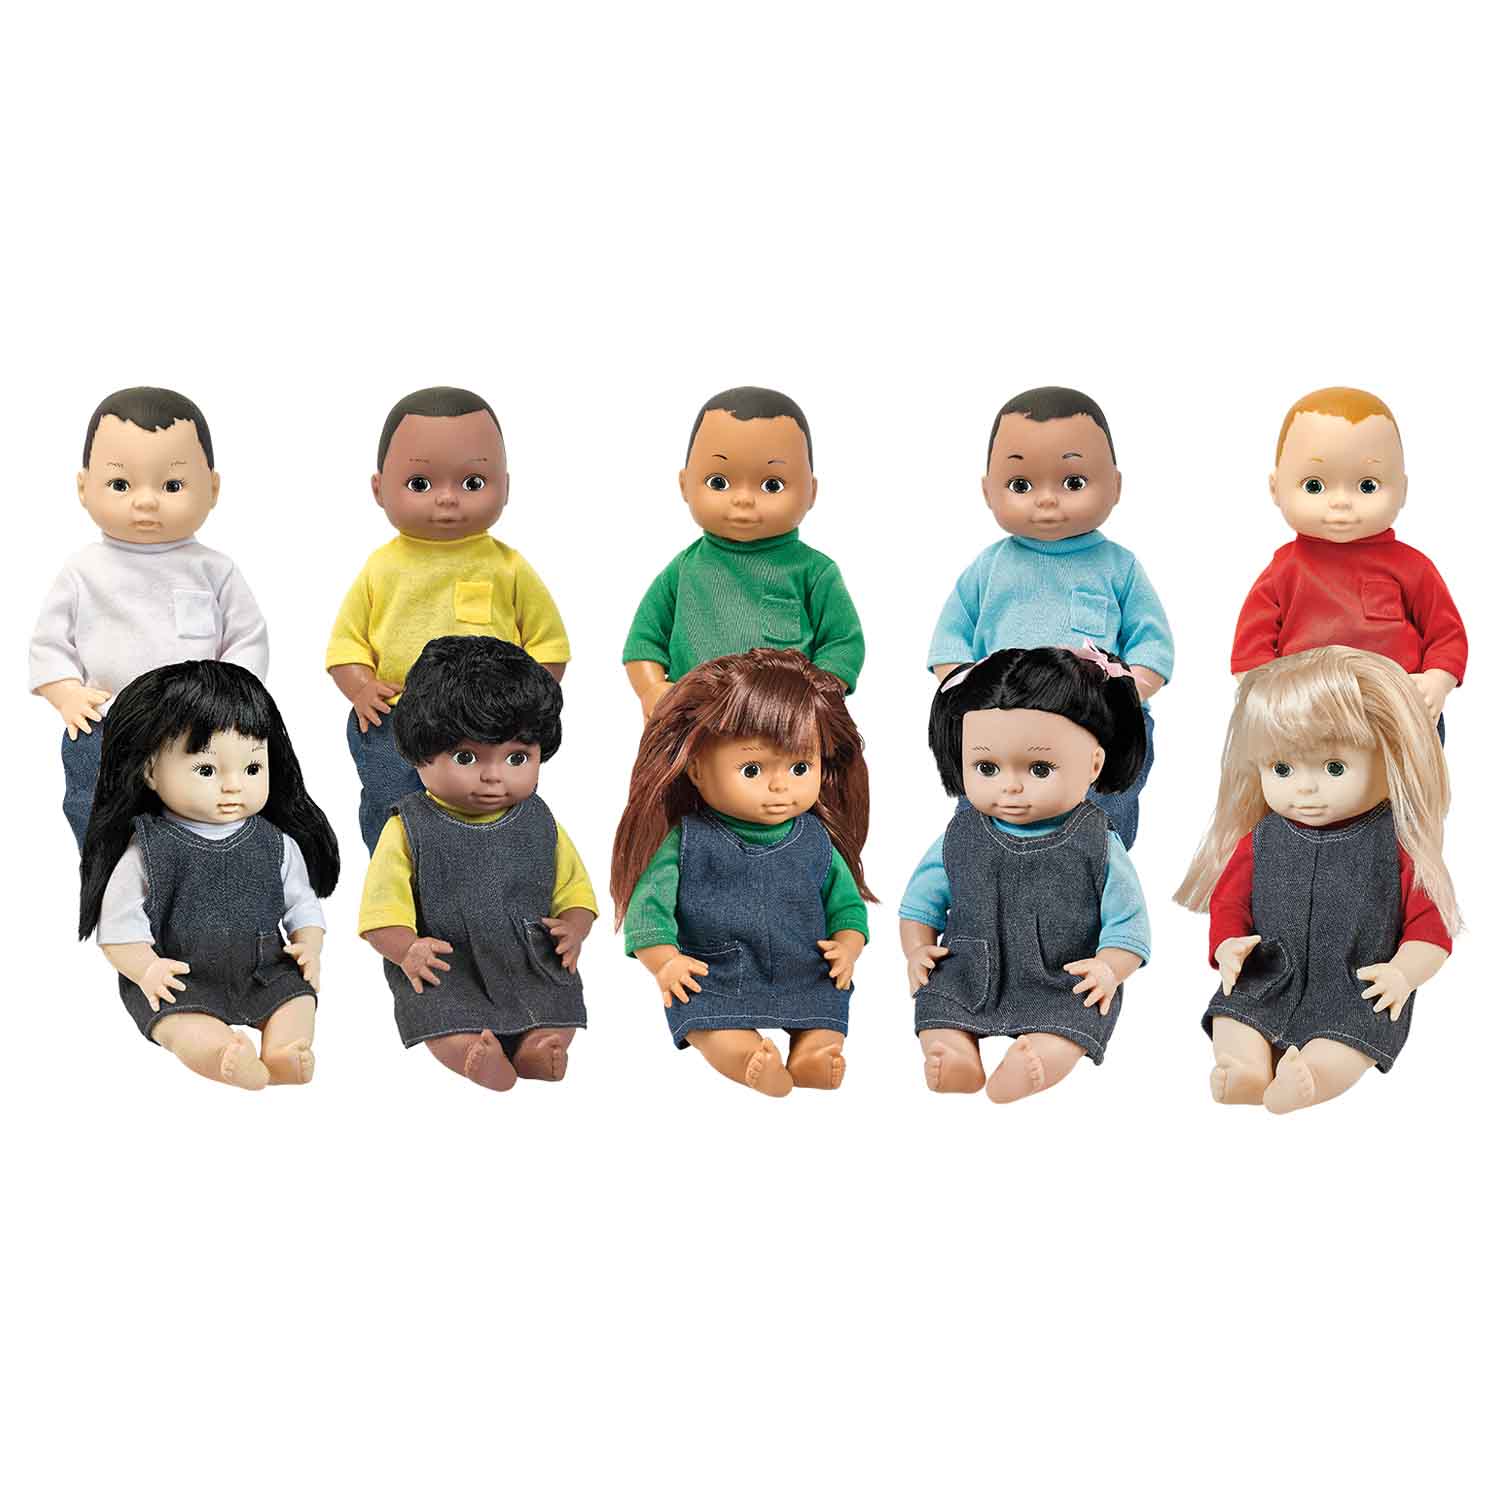 Multi-Ethnic Dolls | Multi-Ethnic Play Dolls | Becker's School Supplies